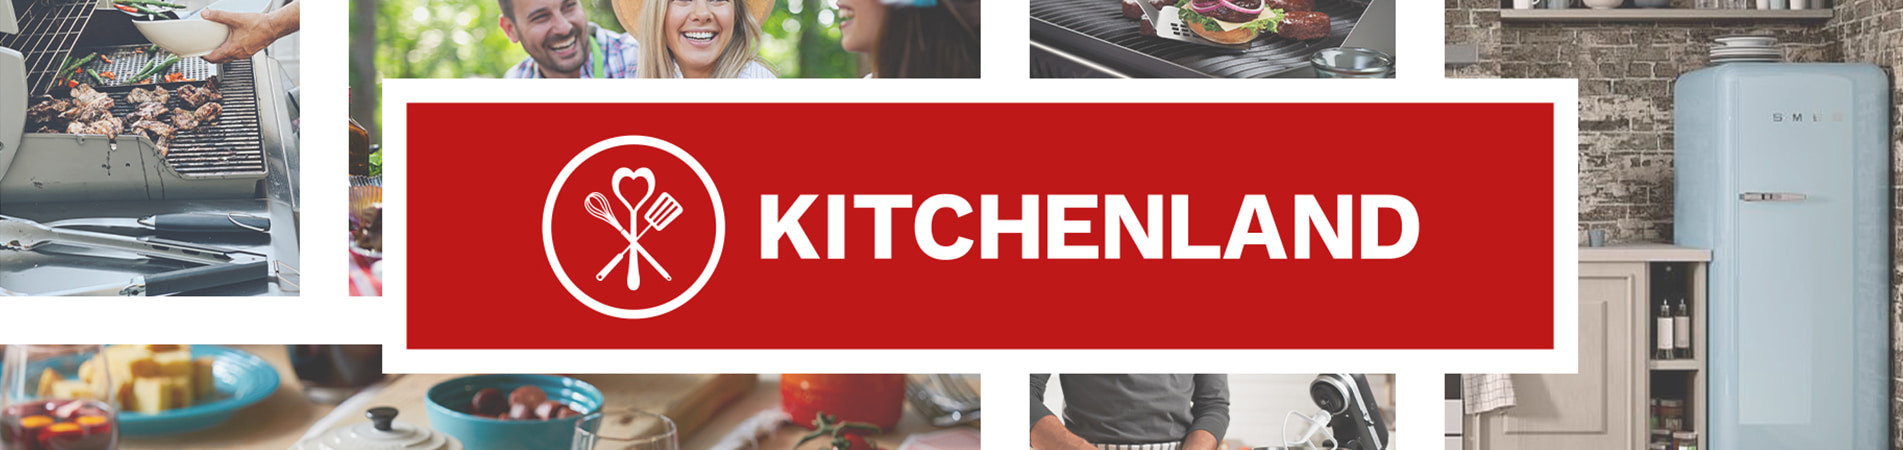 kitchenland-reklamation-retoure-info